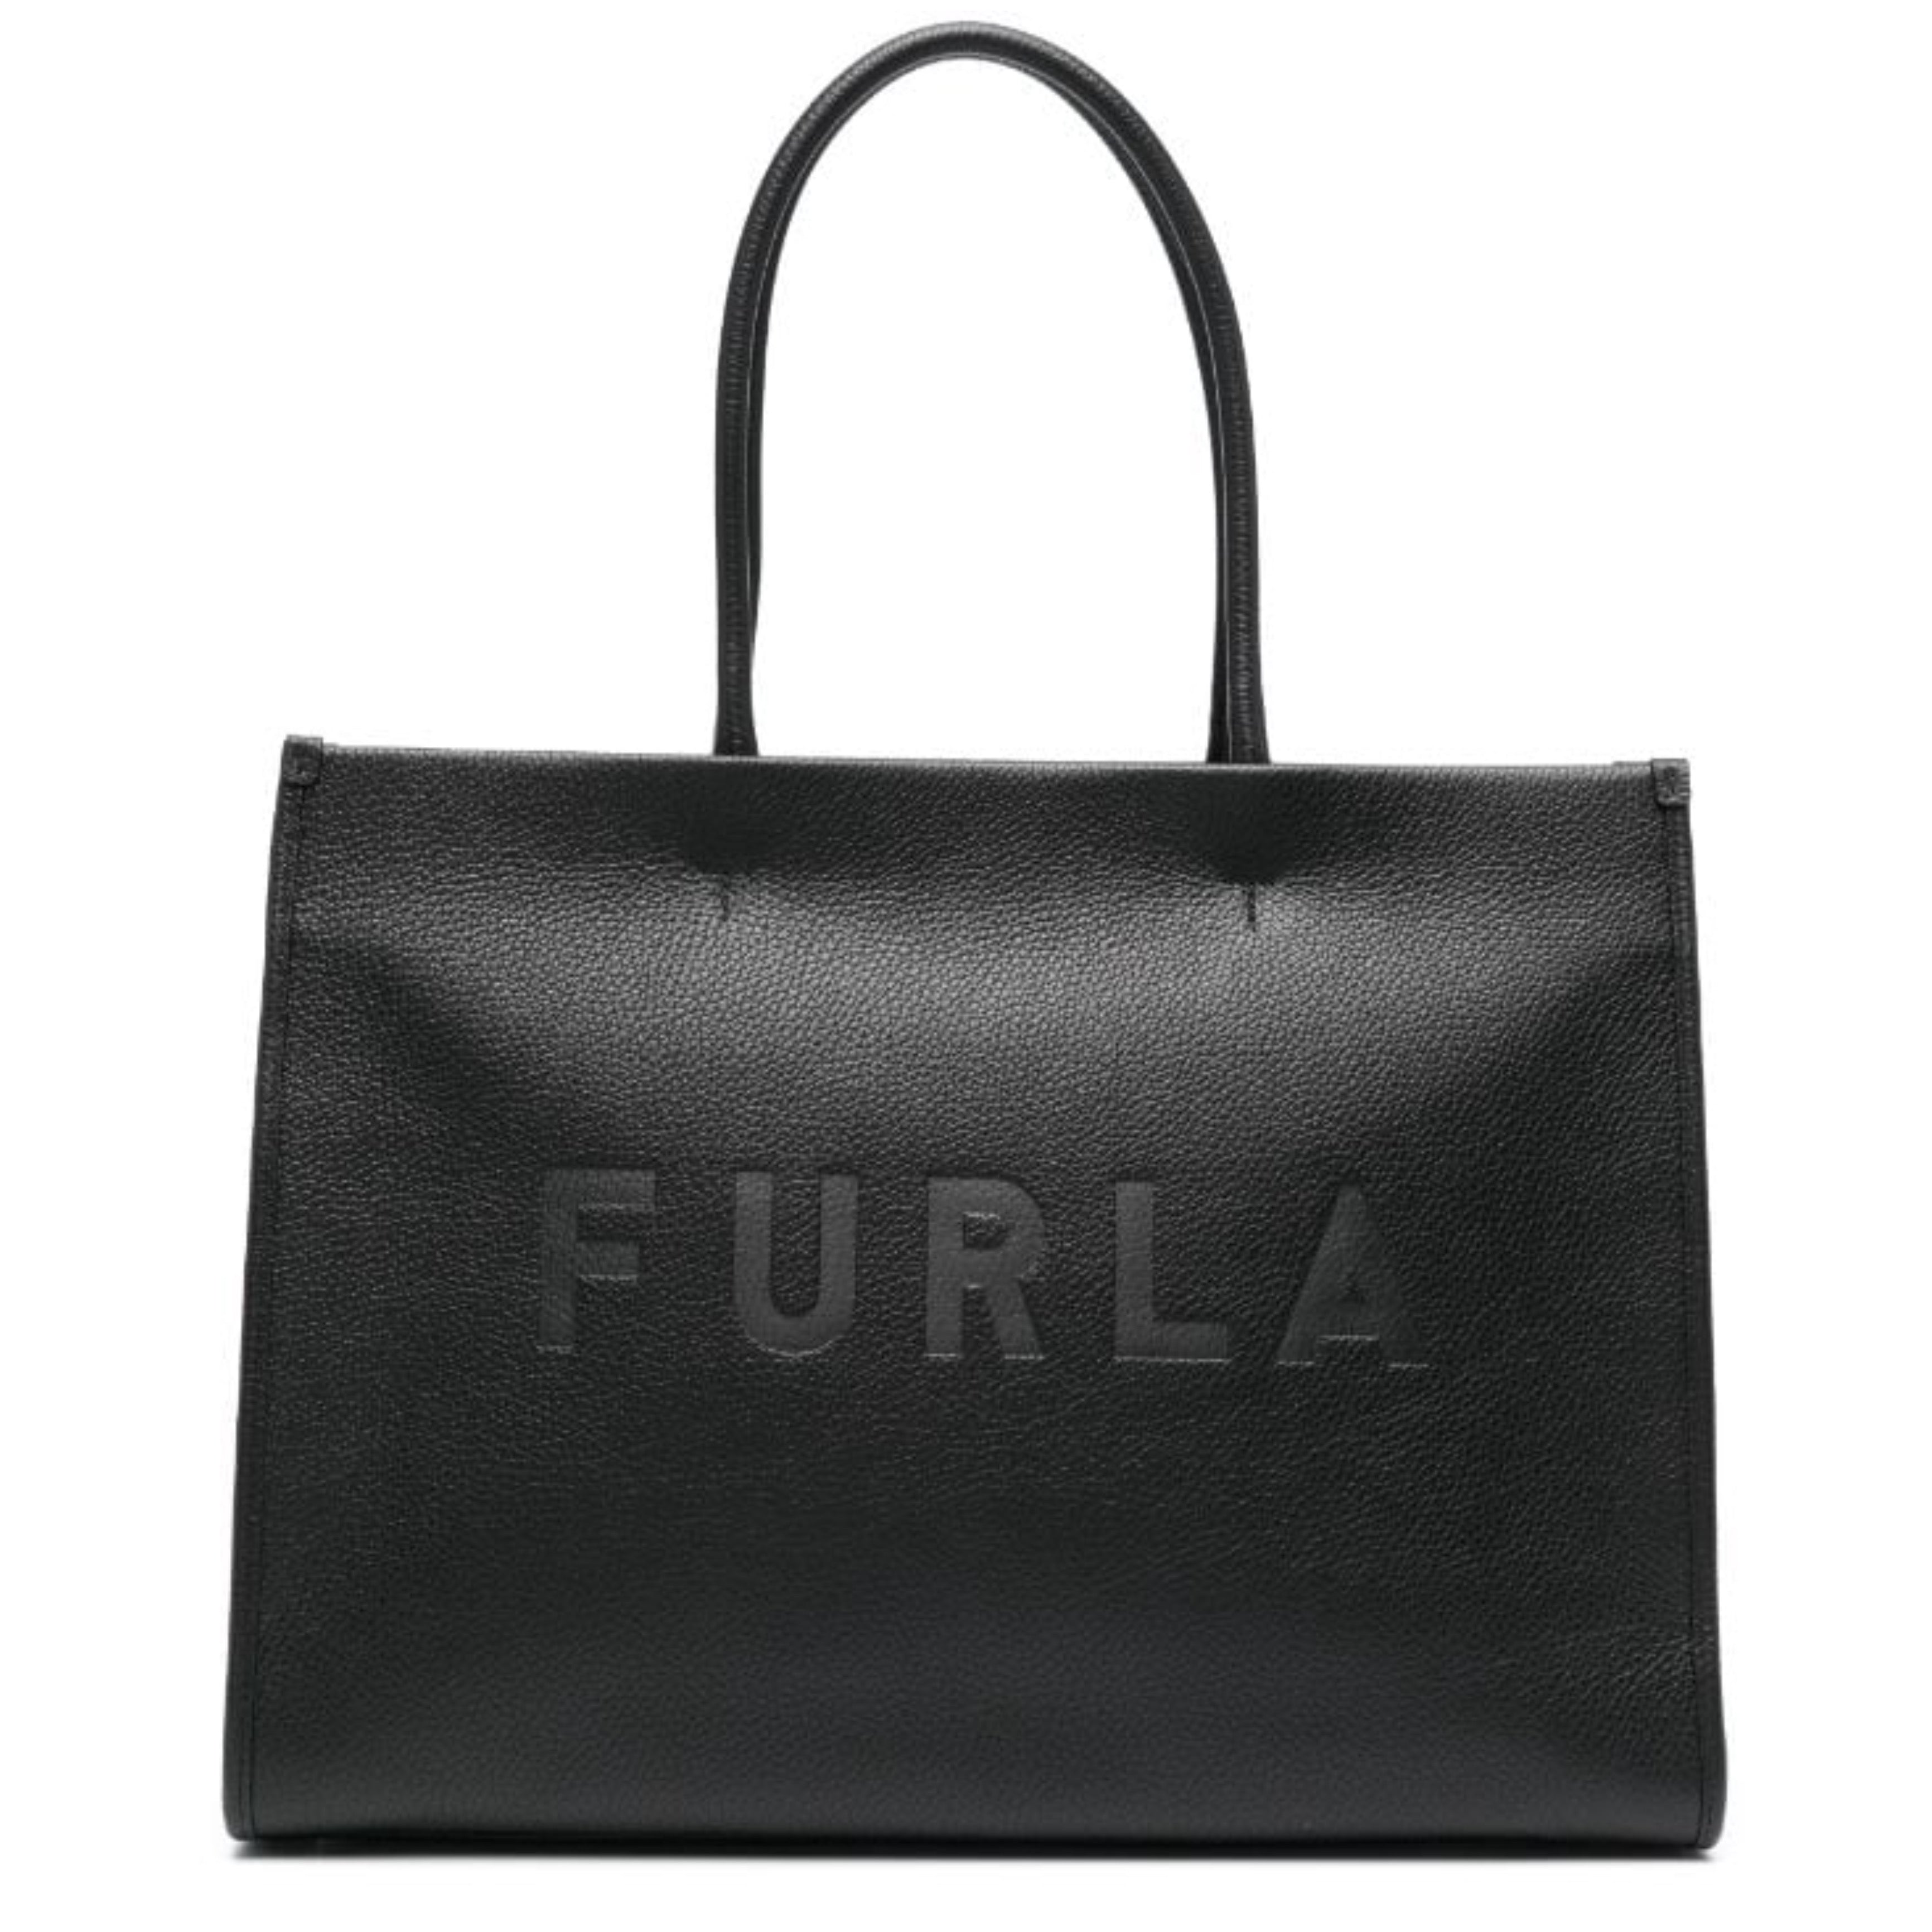 Furla Women Bag